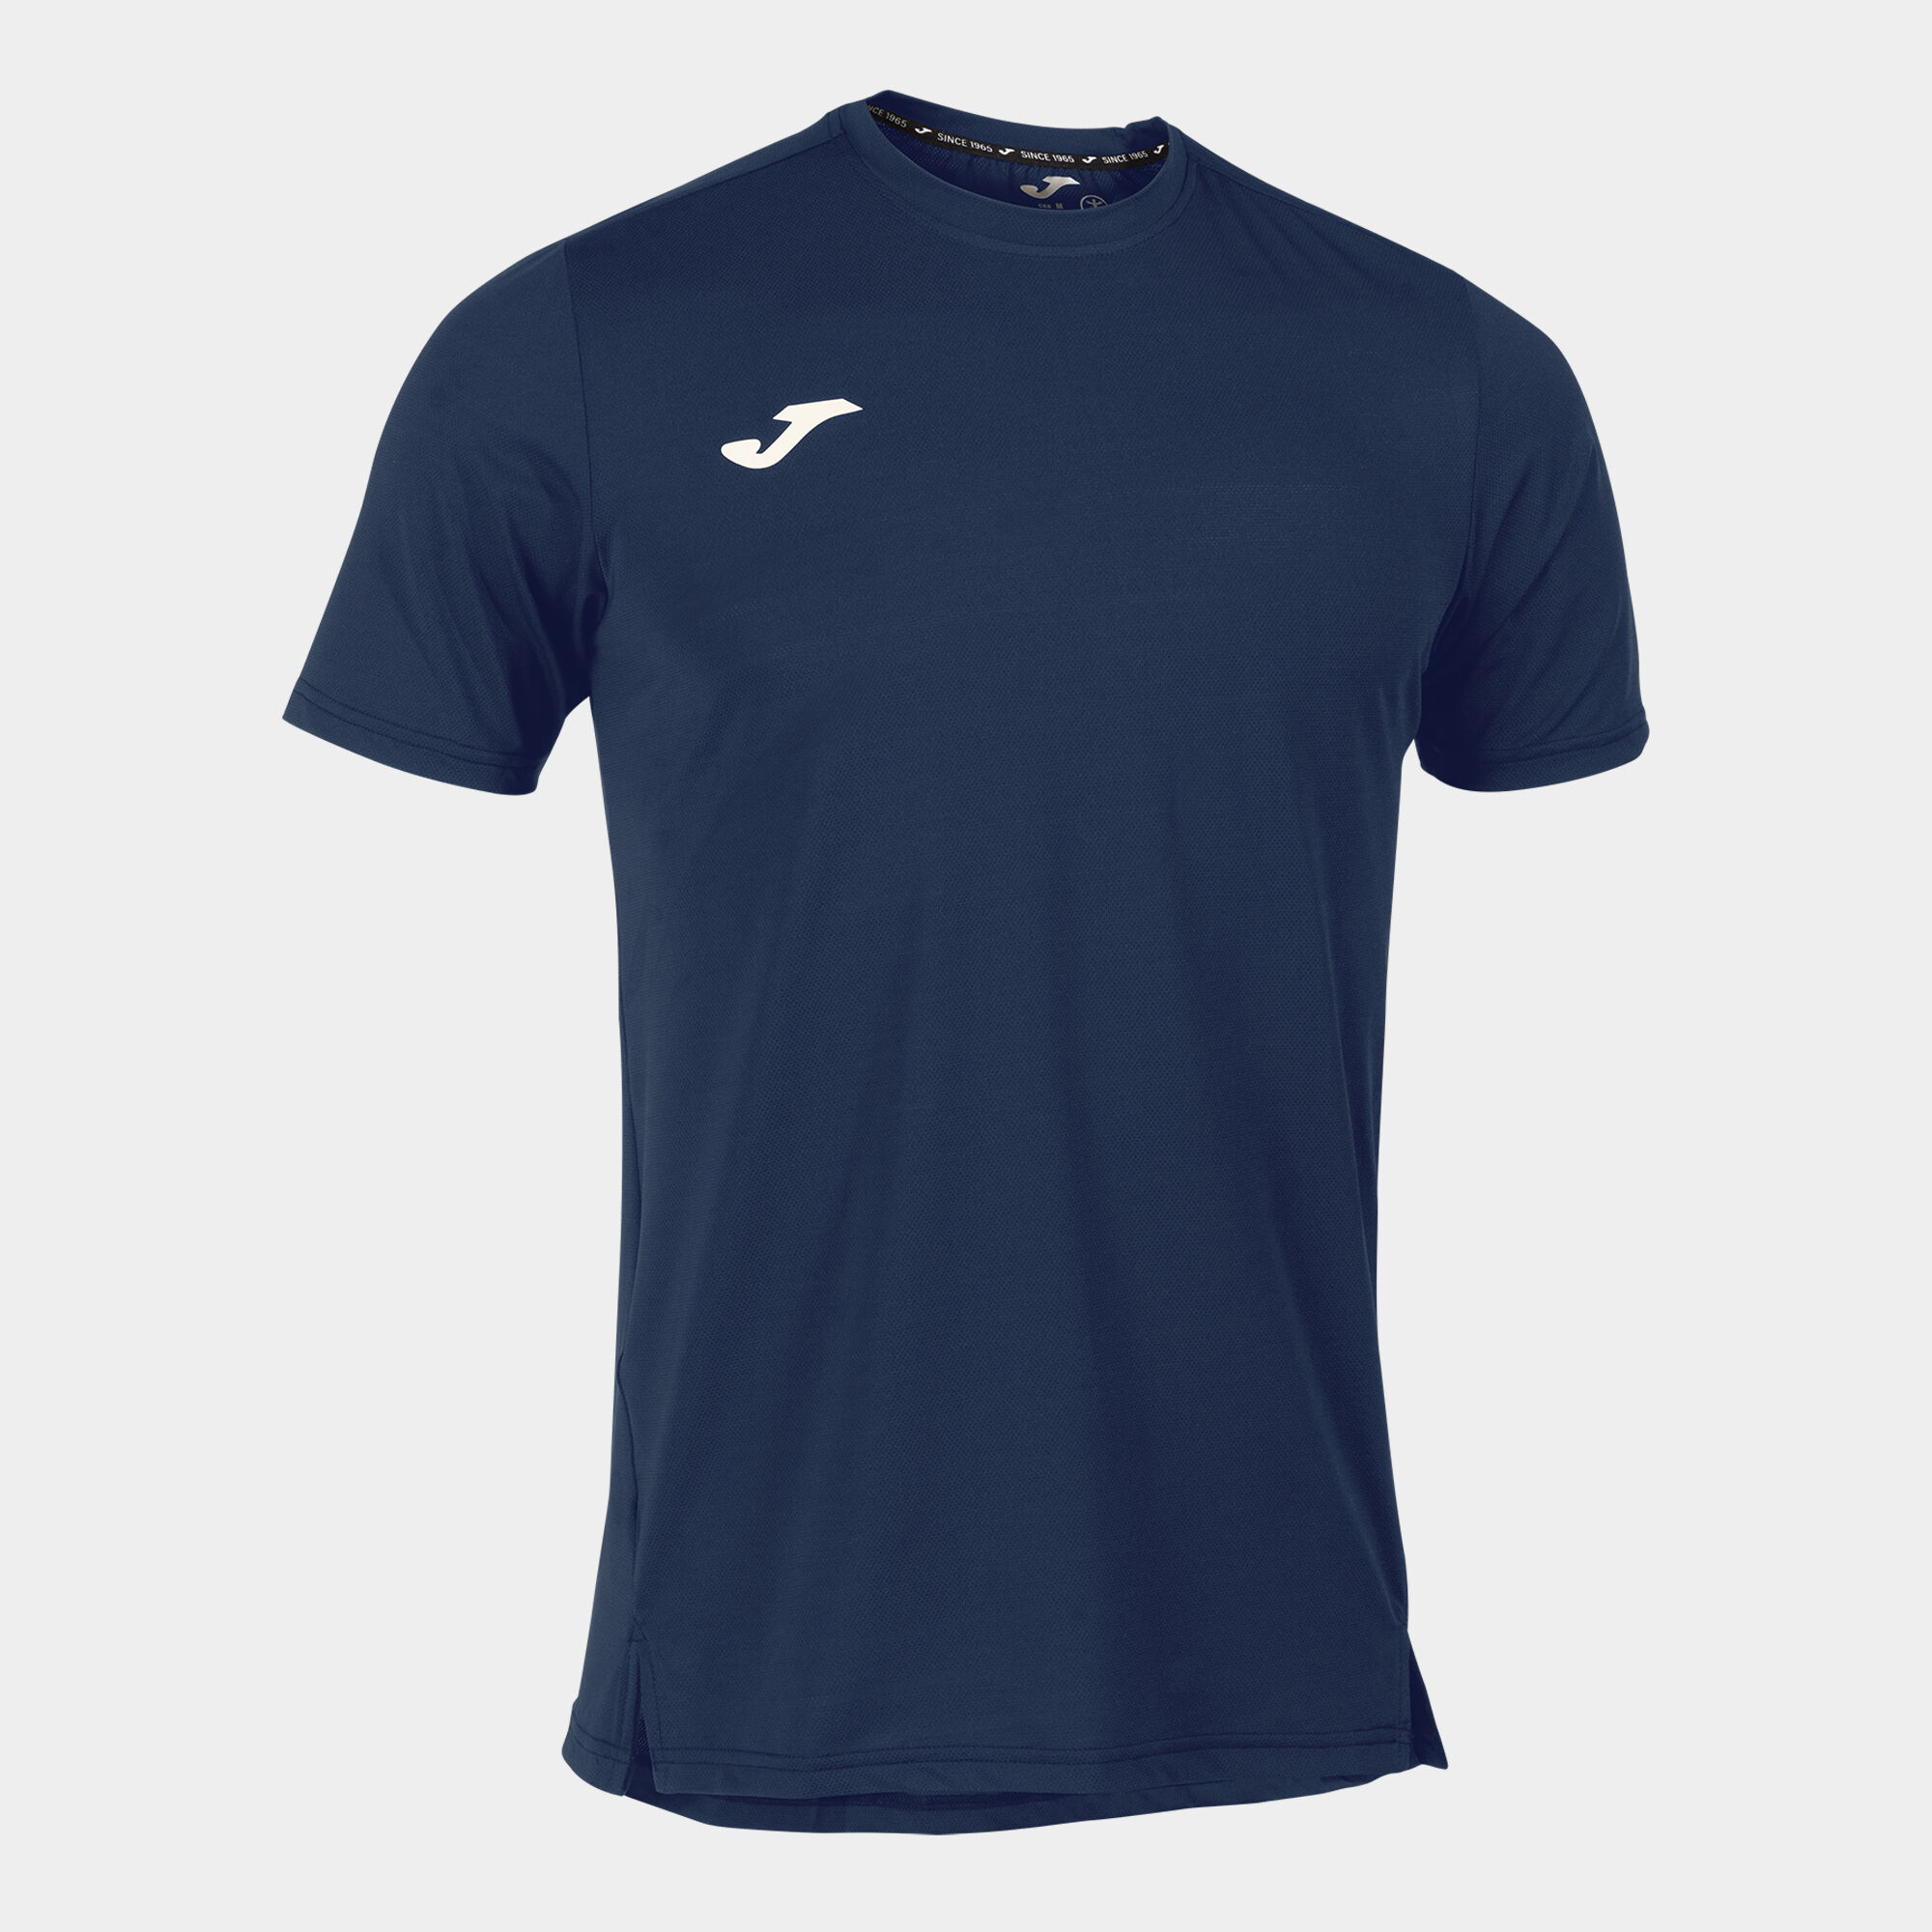 Shirt short sleeve man Torneo navy blue